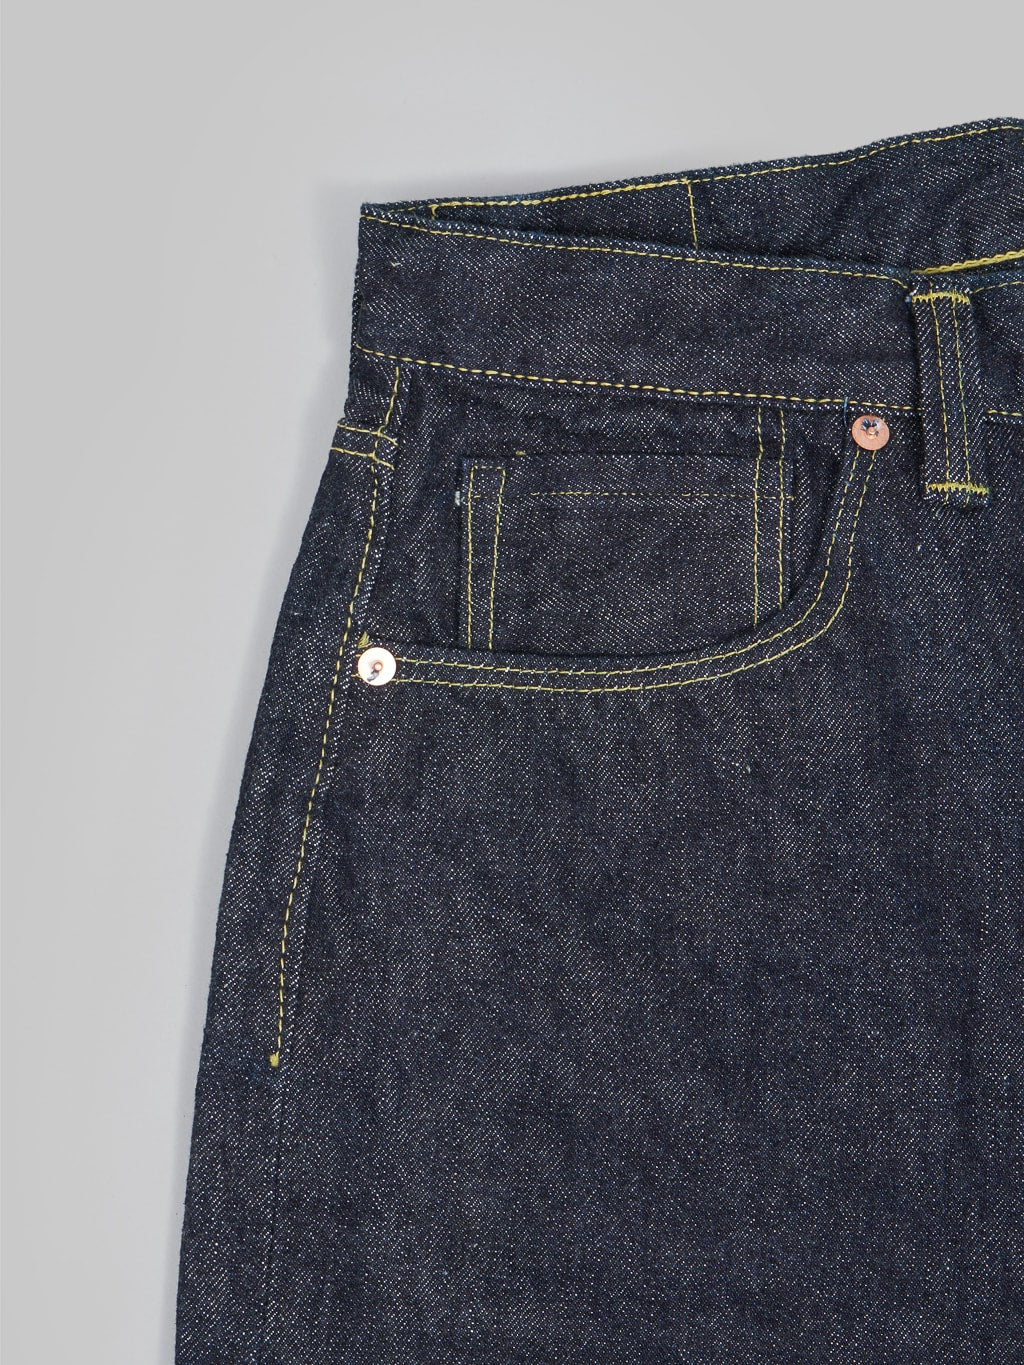 tcb s40s regular straight jeans front pocket